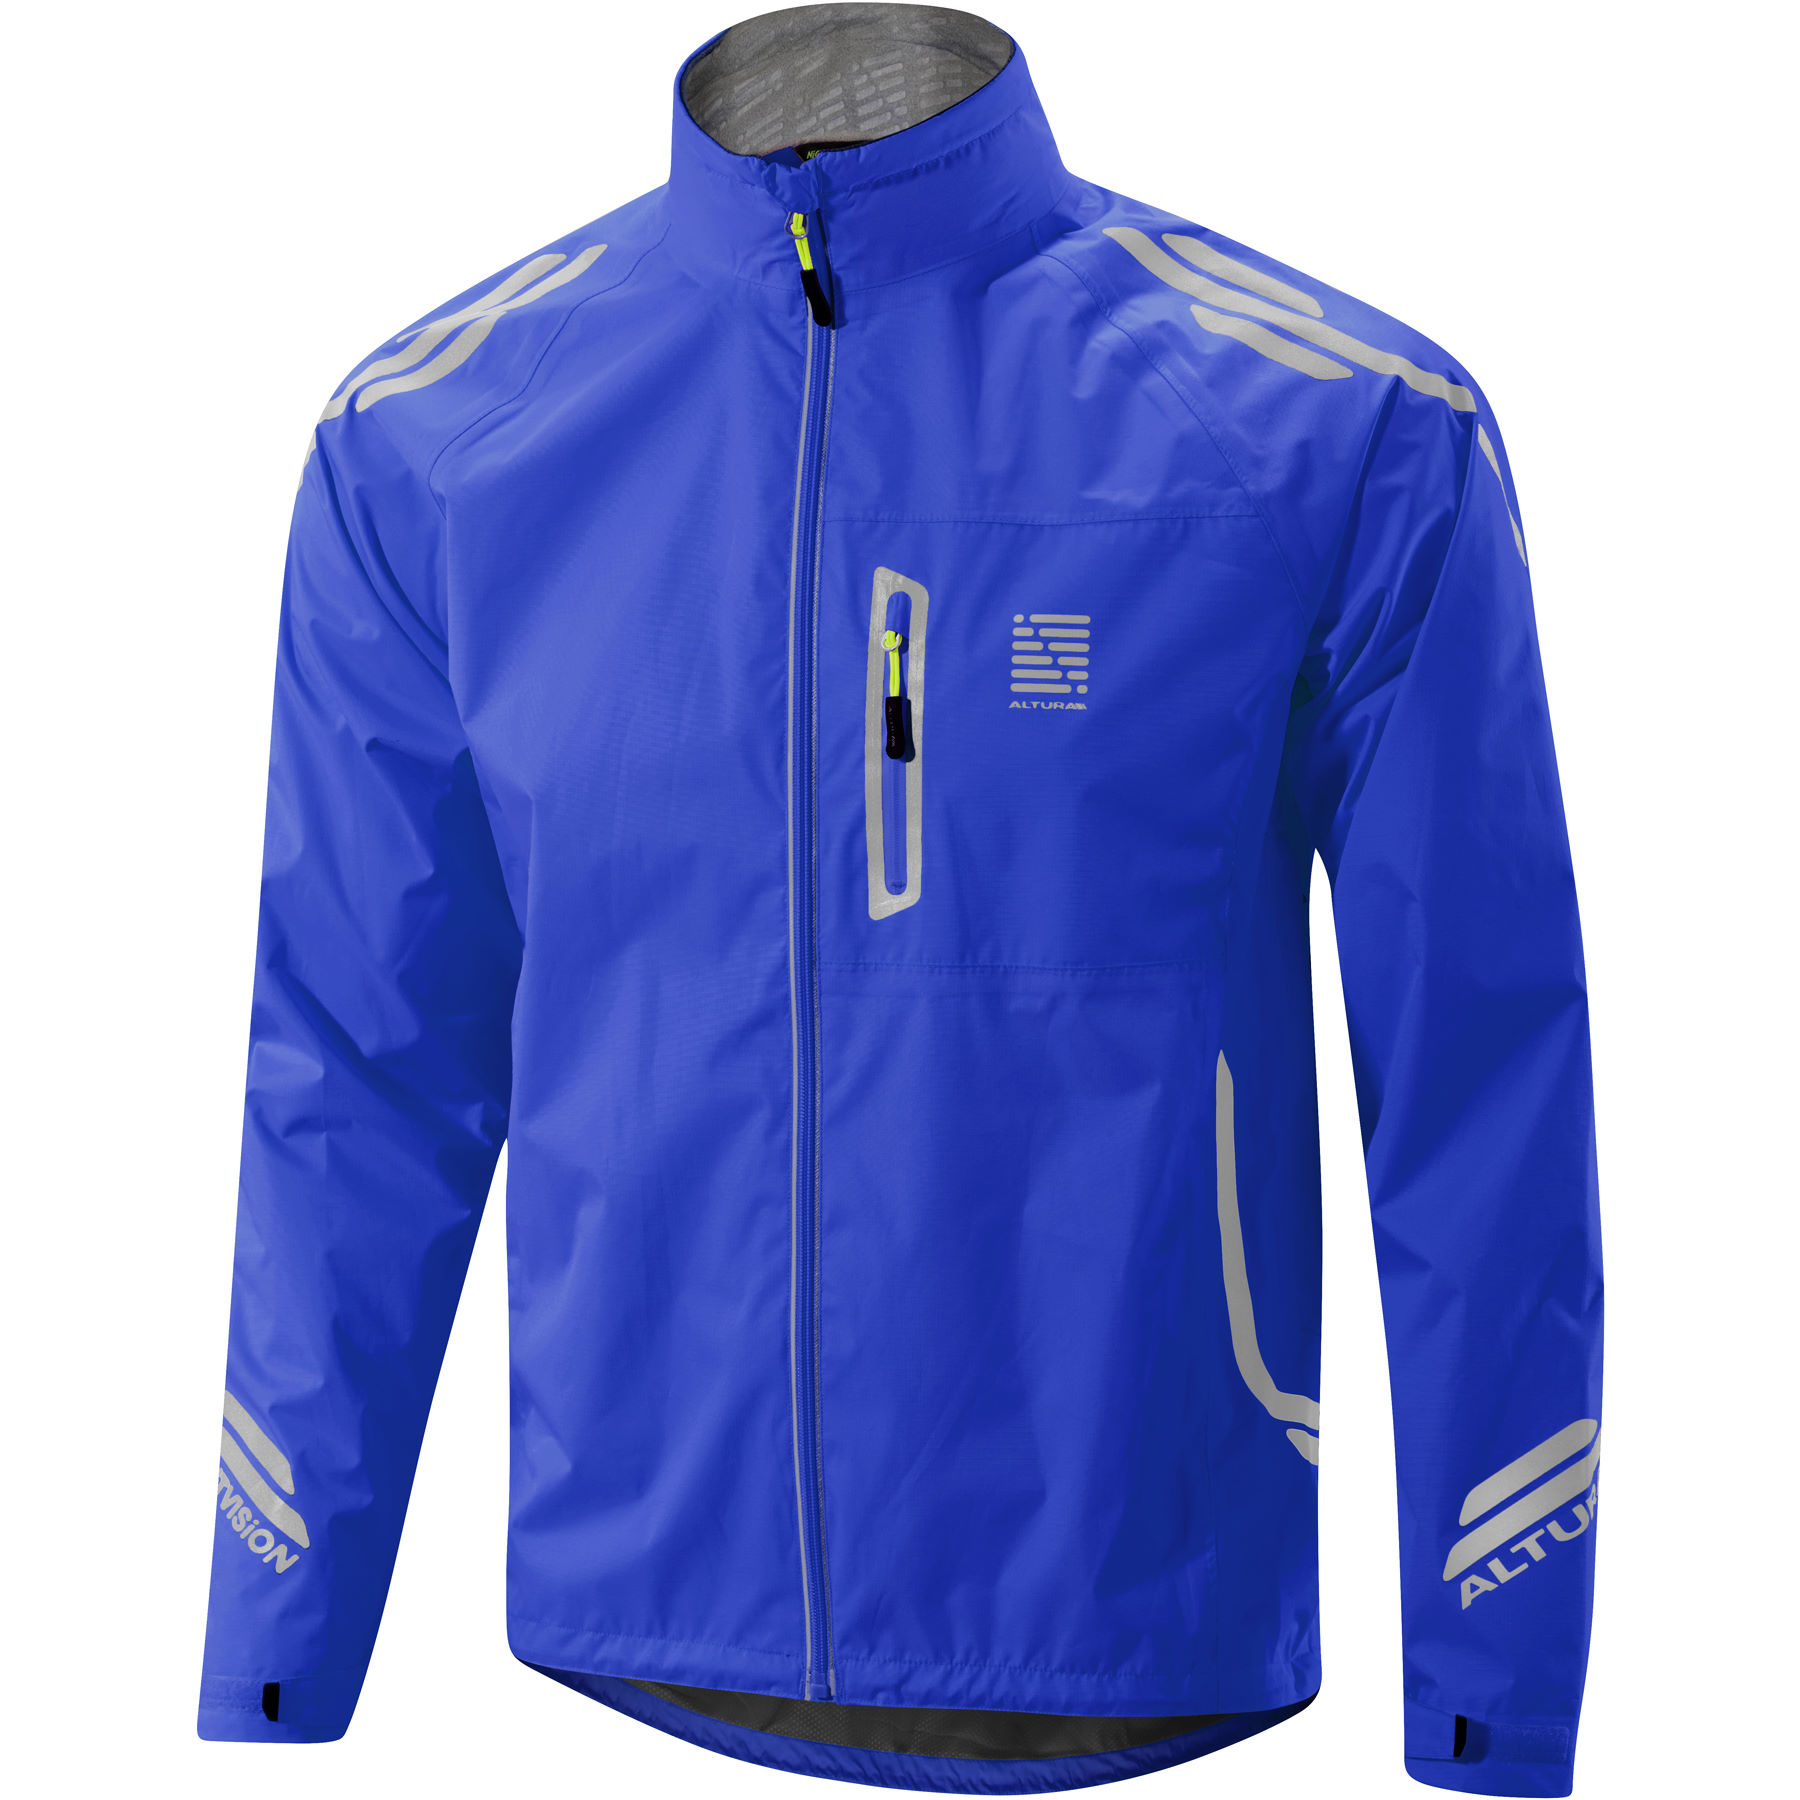 Waterproof Jacket – How to Make One At Home – careyfashion.com